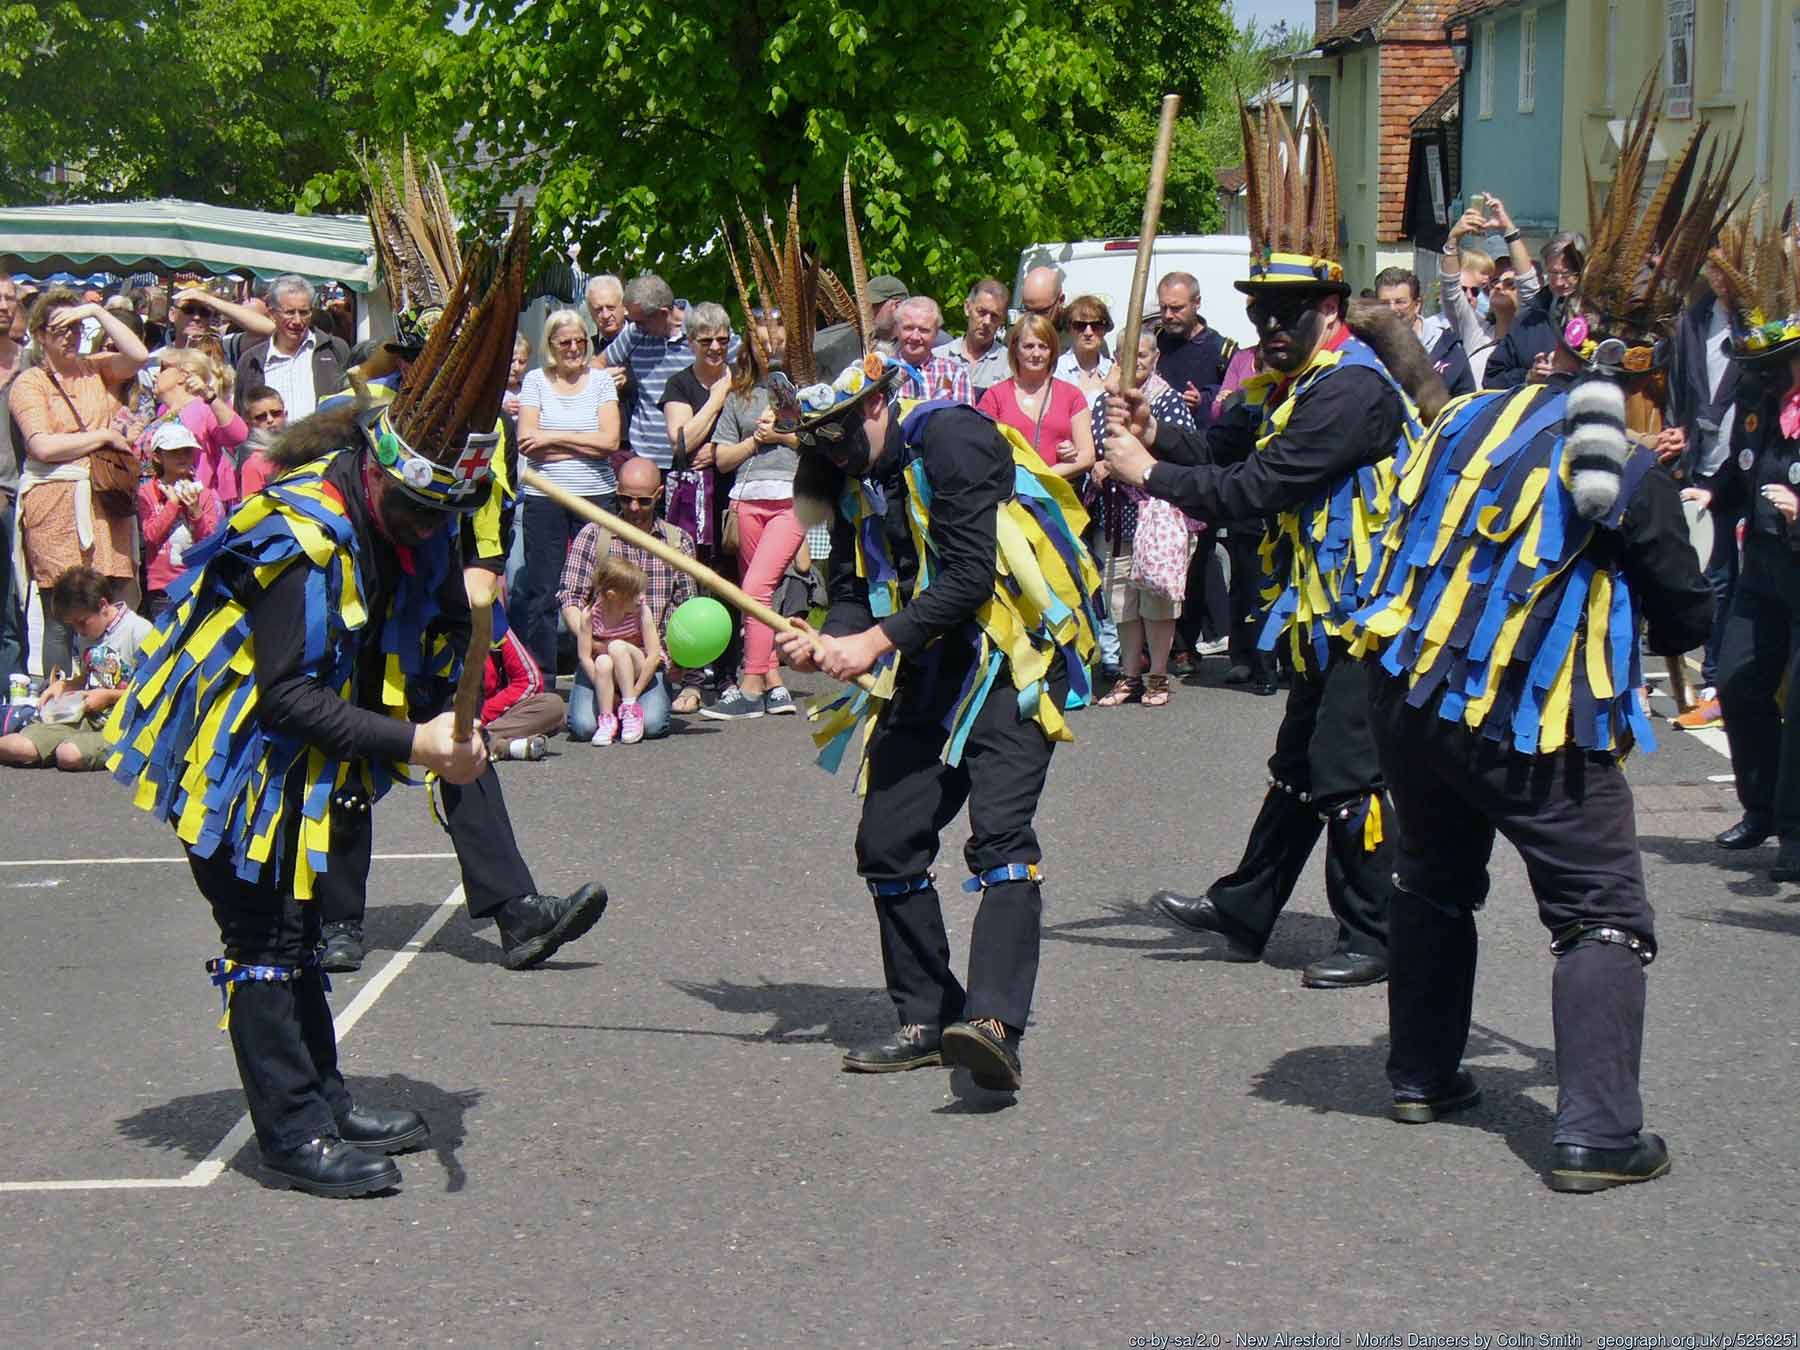 Alresford Watercress Festival. Morris dancers